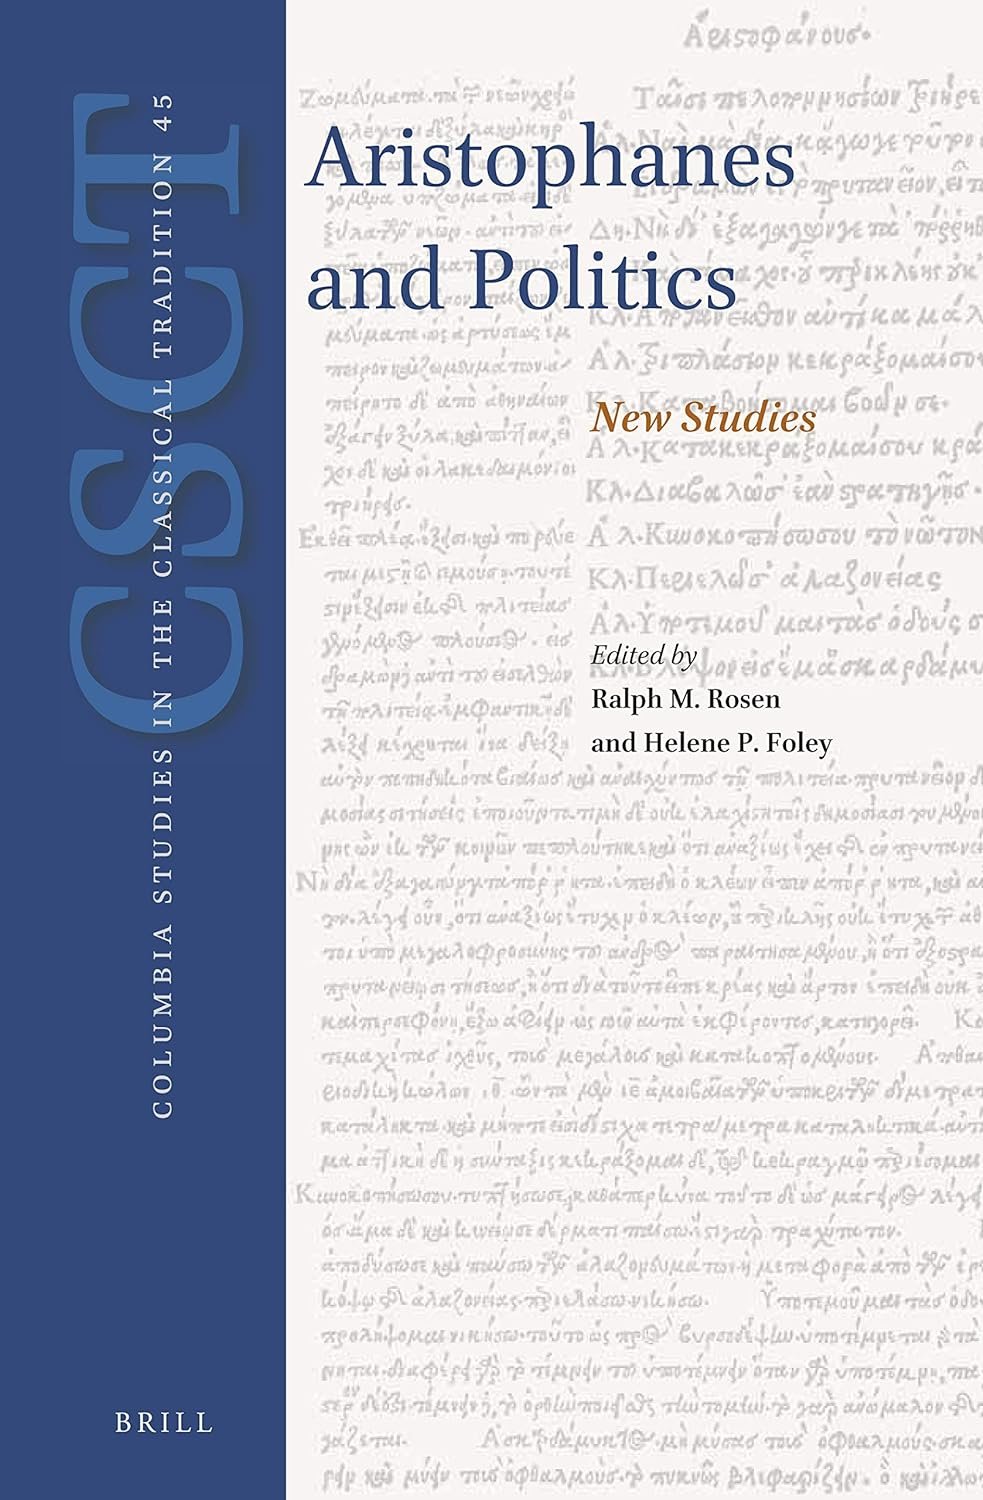 Aristophanes and Politics New Studies - edited by Ralph M. Rosen, Helene P. Foley.